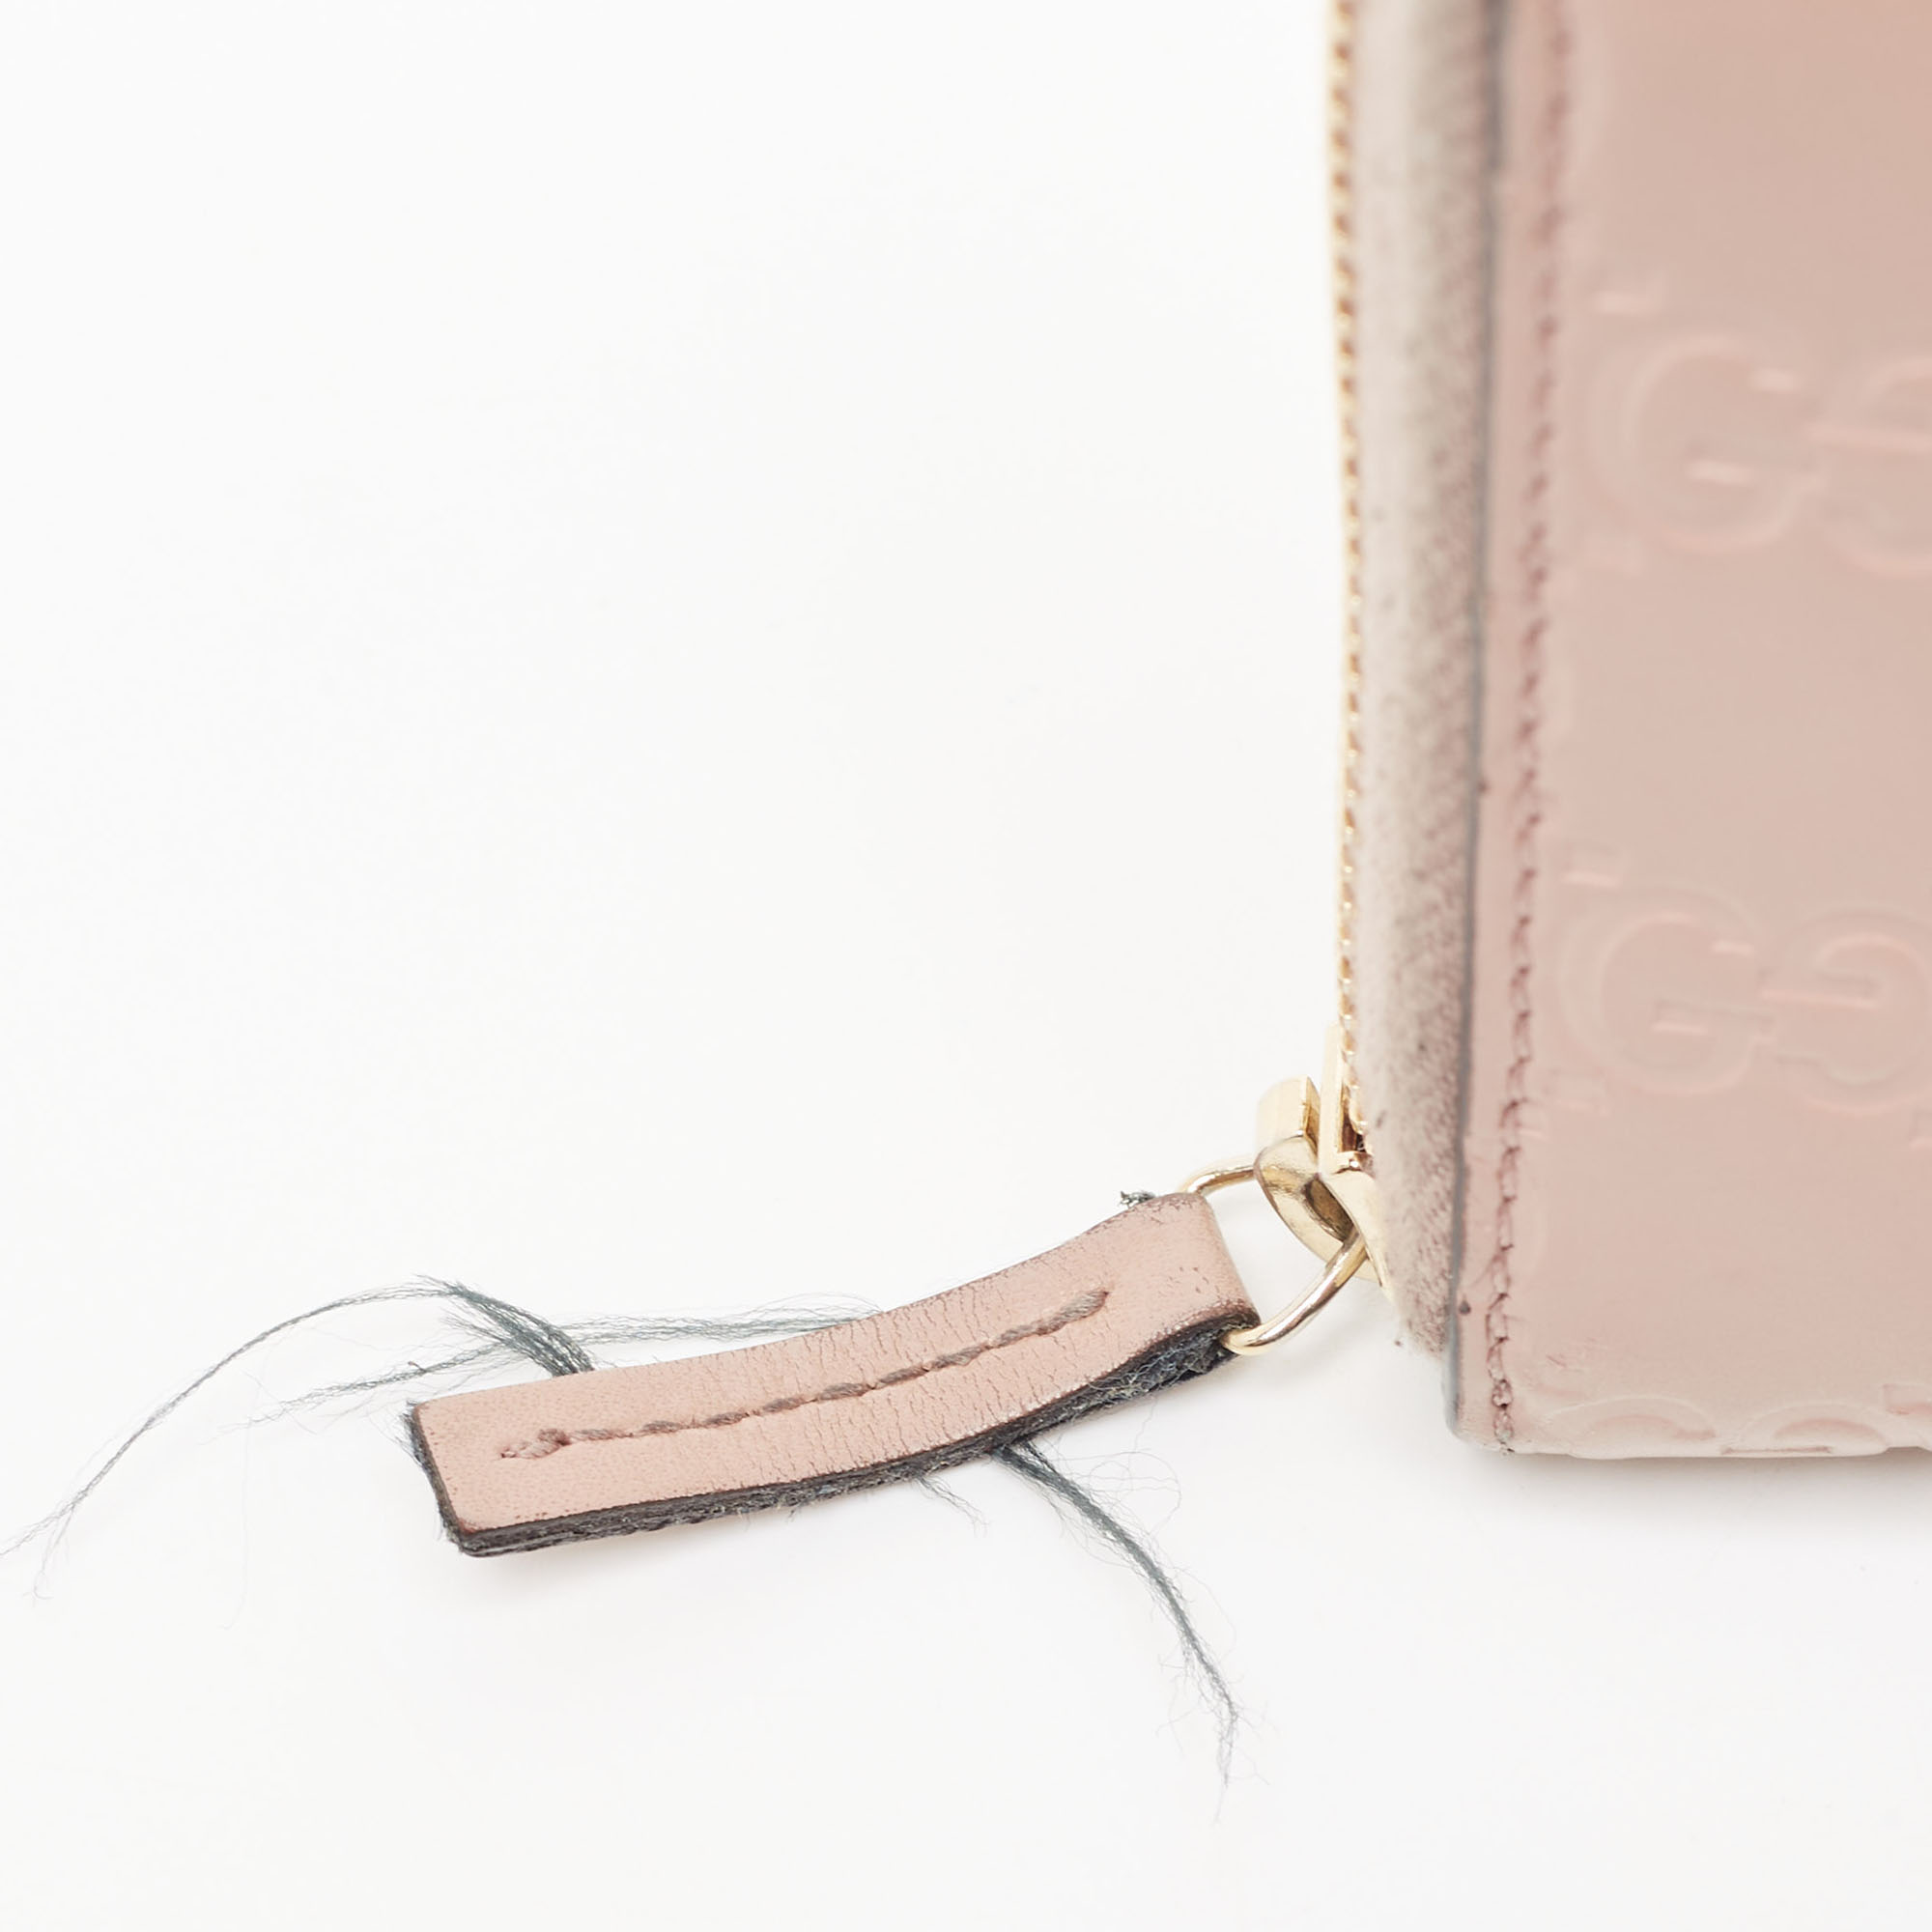 Gucci Beige Guccissima Leather Zip Around Continental Wallet